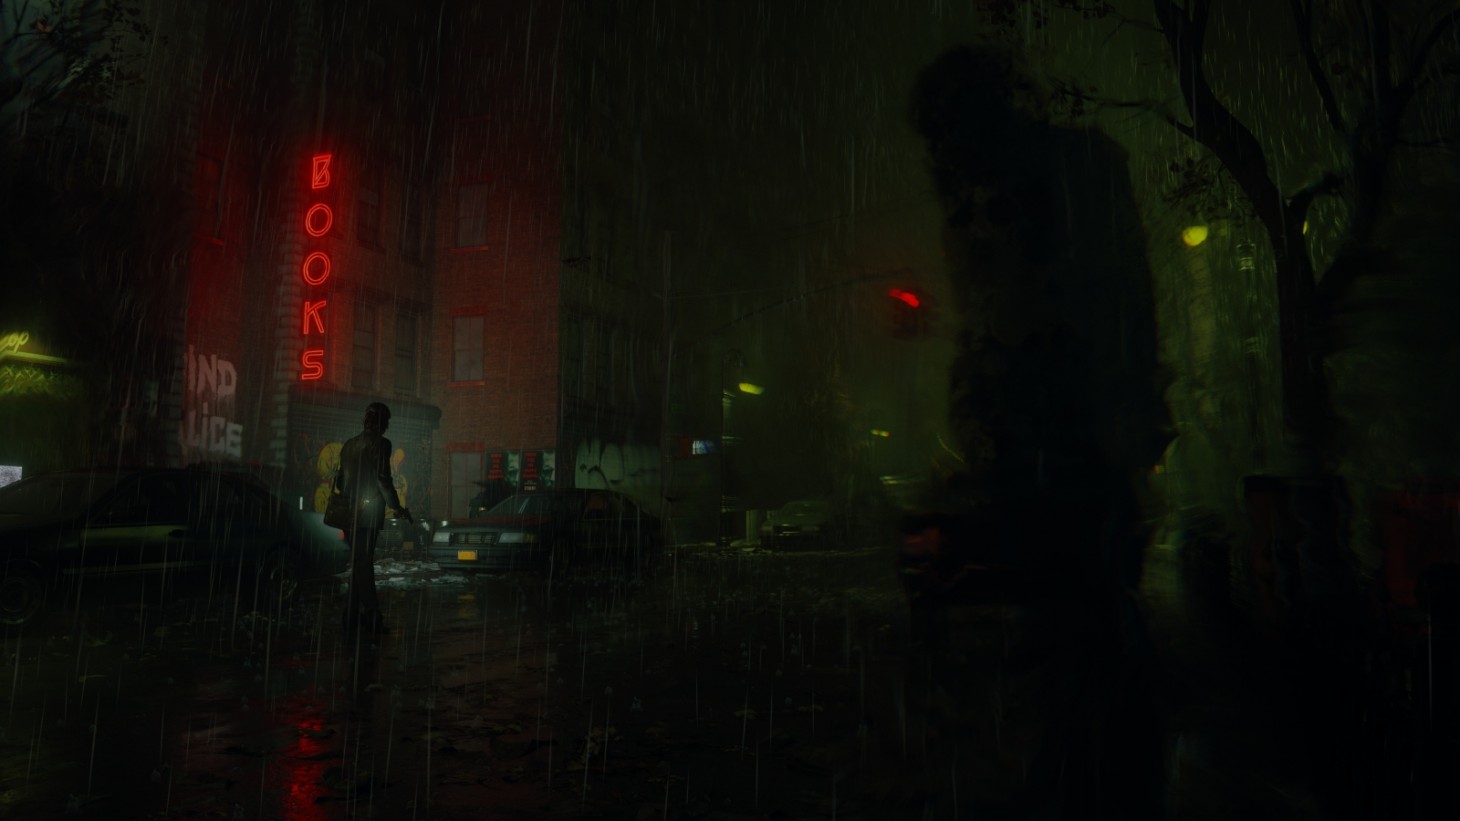 Alan Wake 2 Preview - Exploring A Killer Hotel As Alan Wake - Game Informer